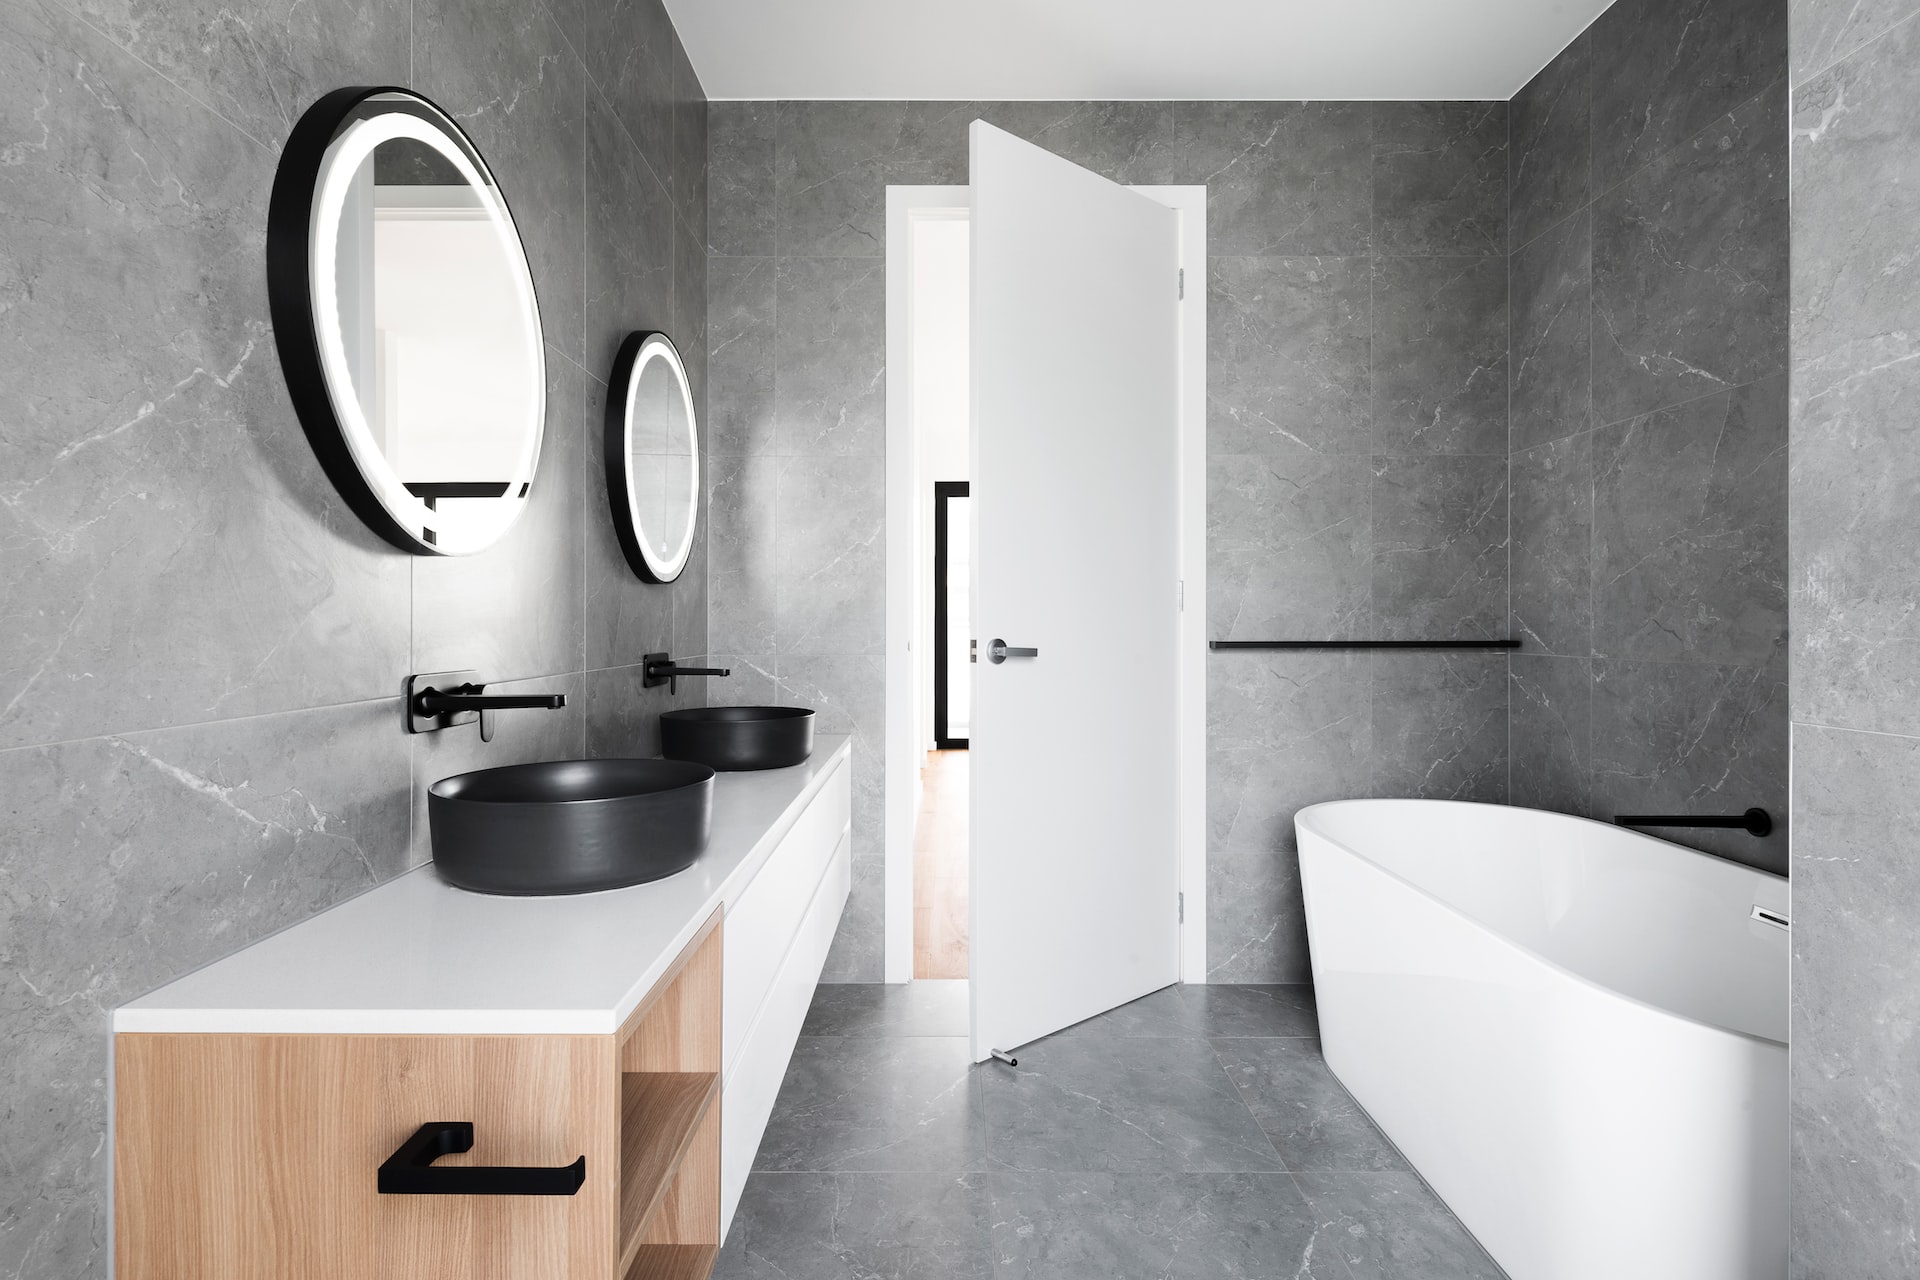 Design of Your Bathroom